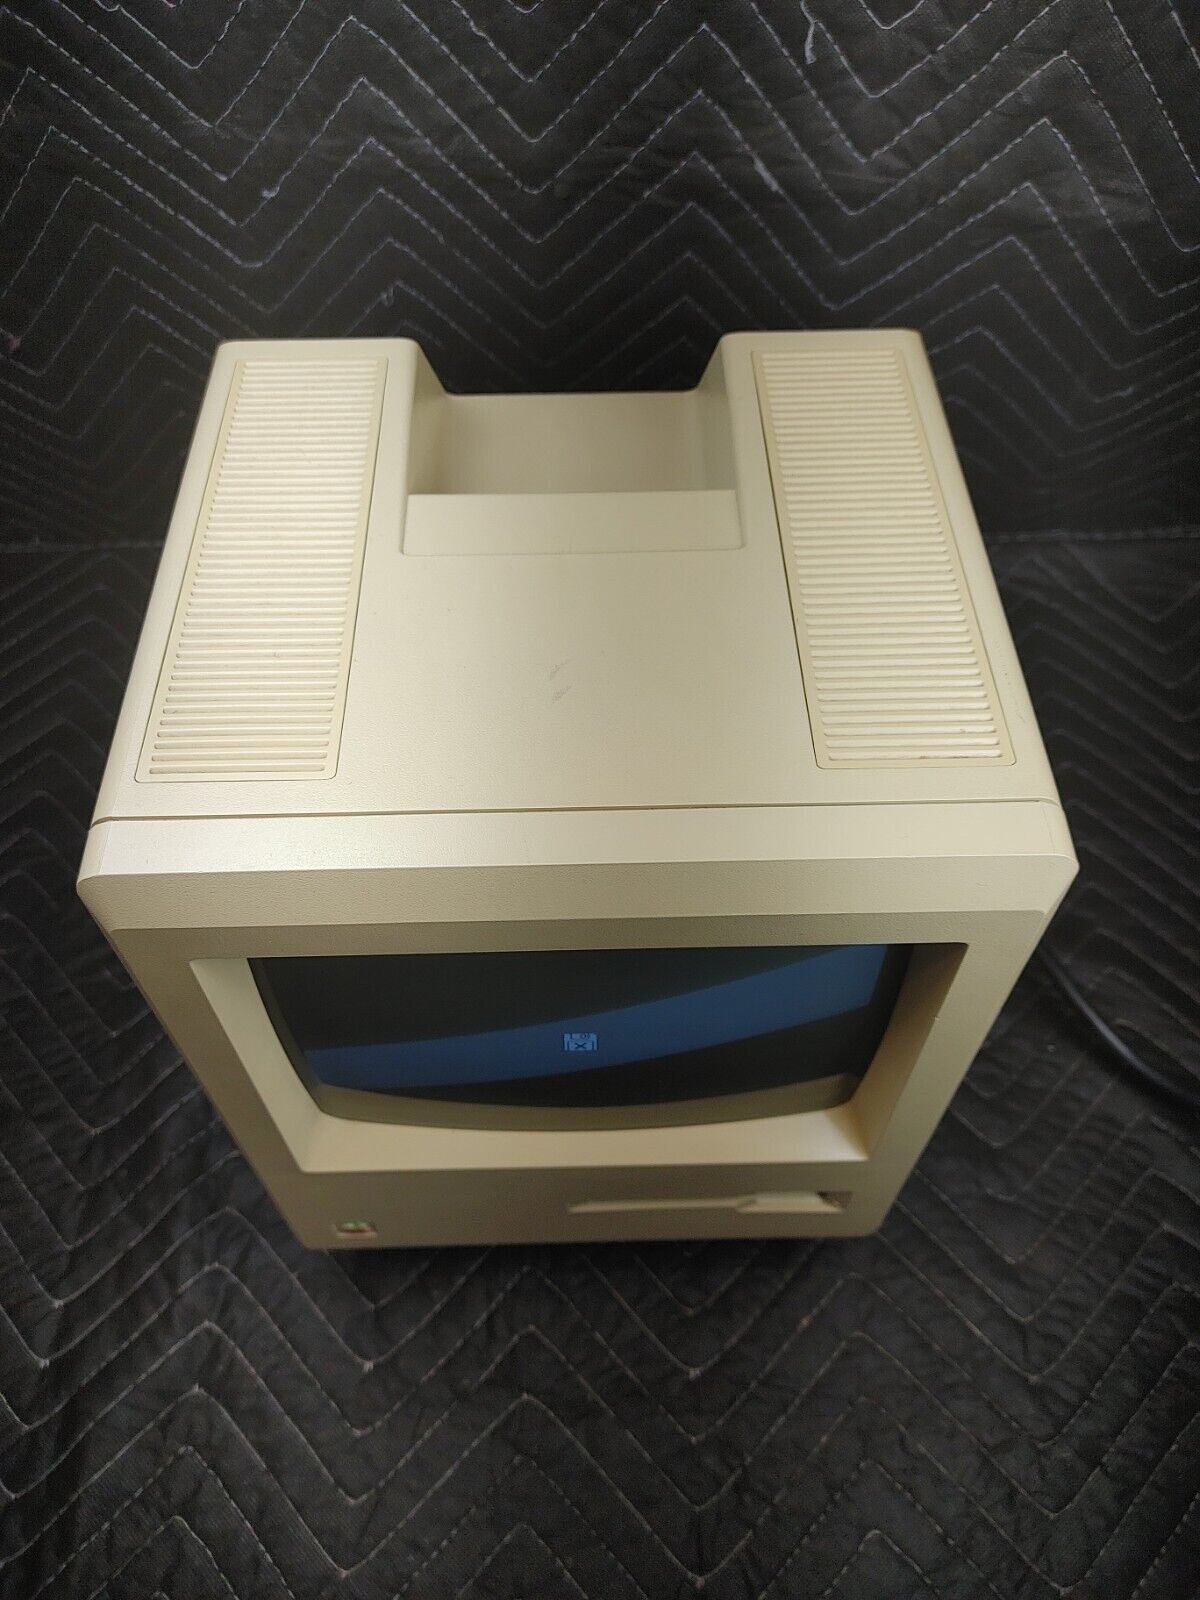 Vintage Apple Macintosh Plus 1MB M0001A Computer